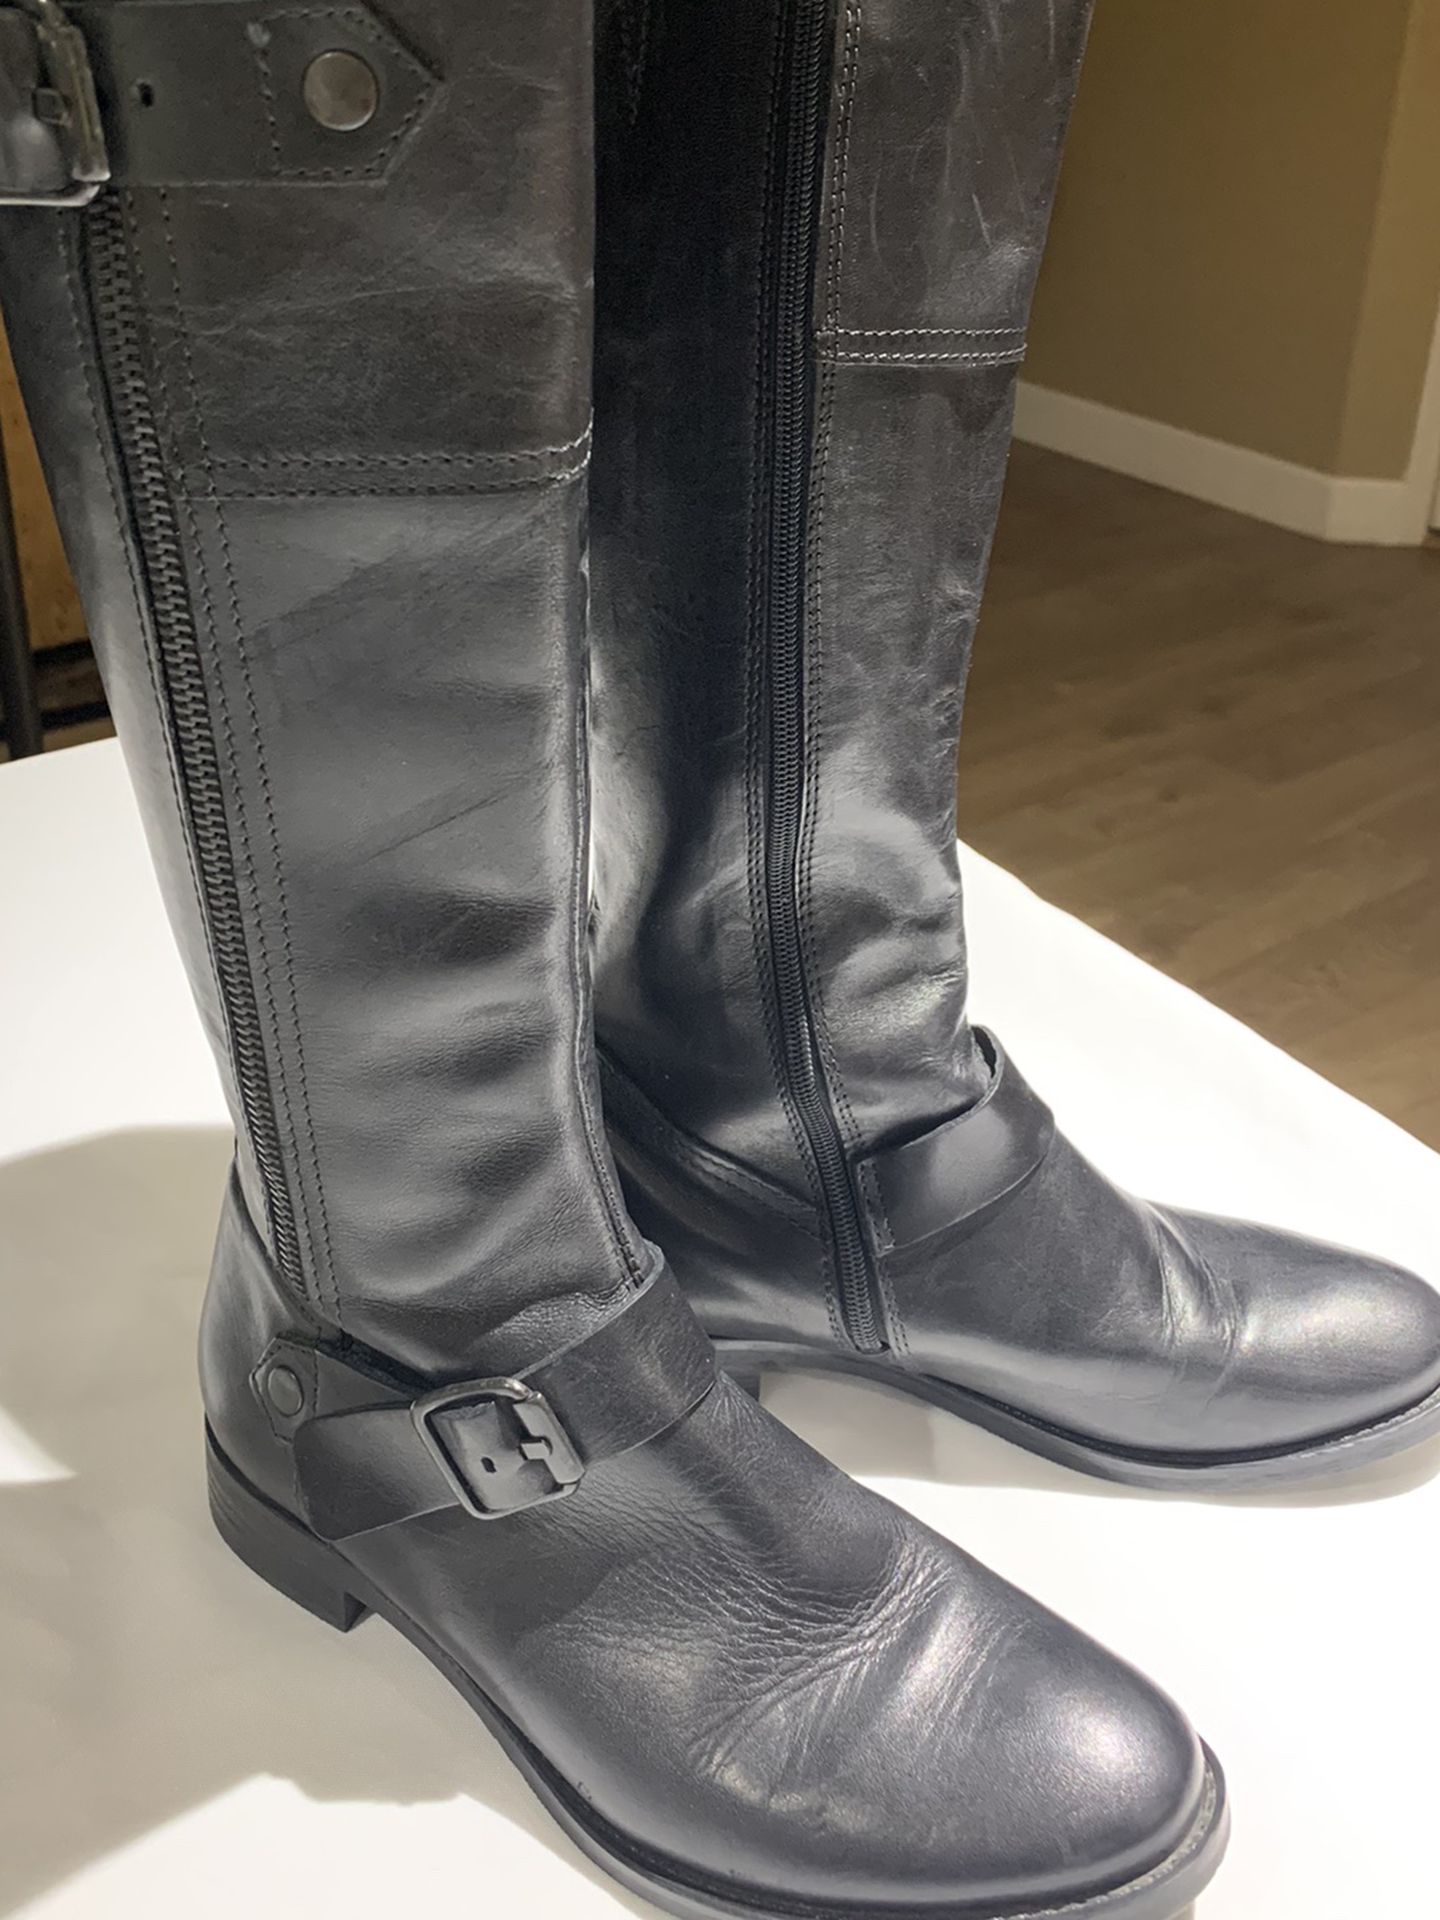 ALDO Women’s Black Leather Boots Size 7